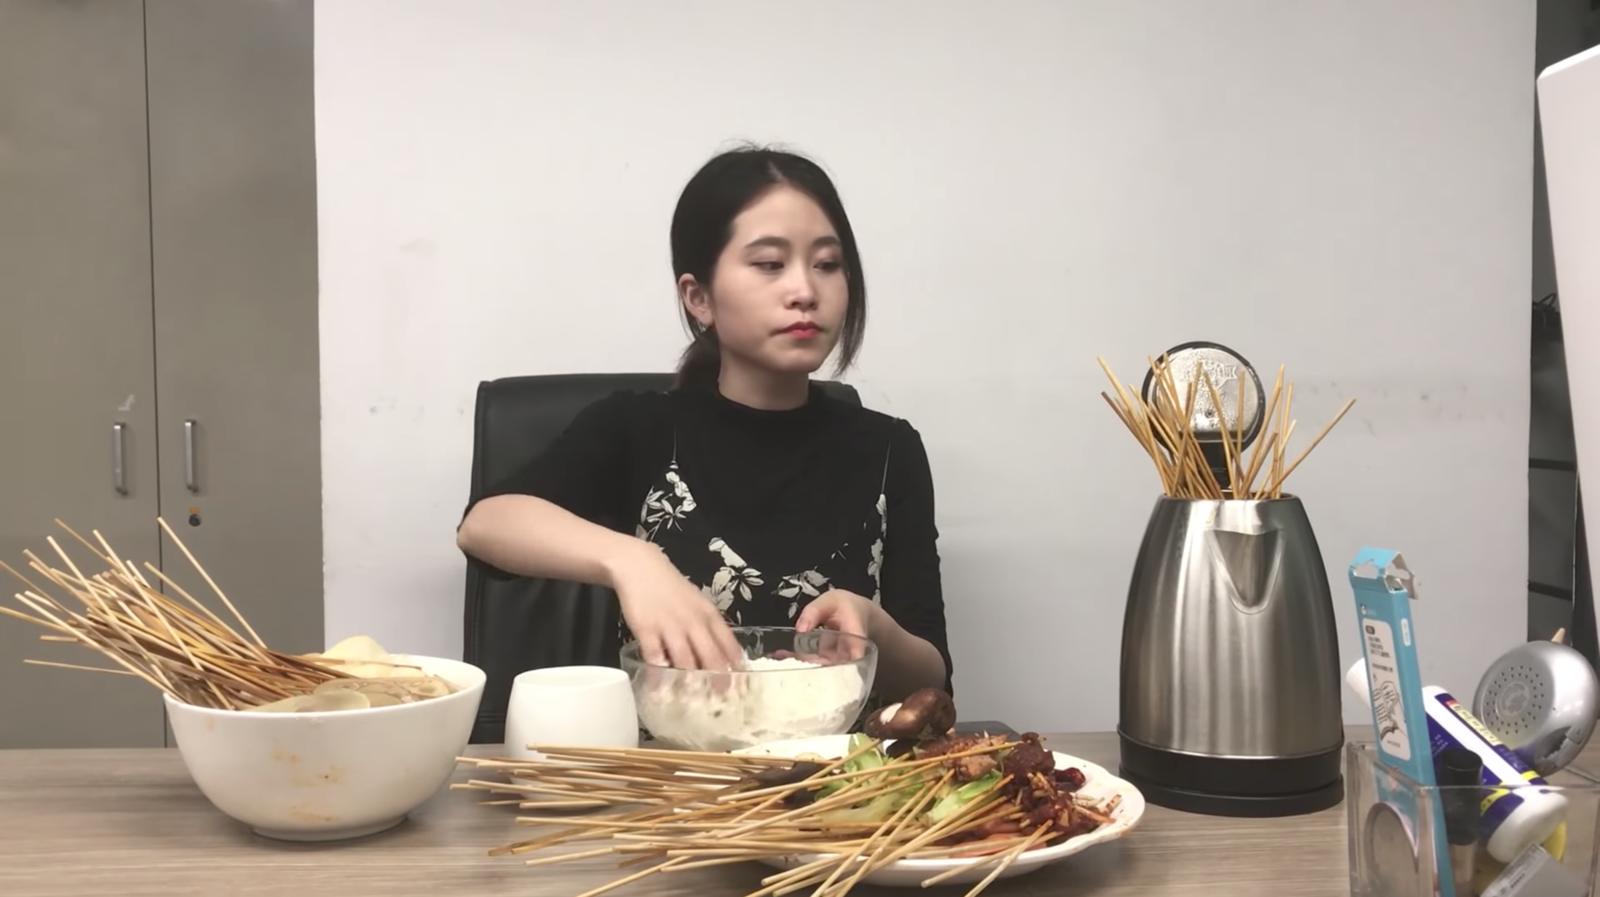 Китаянка готовит. Китайская девушка готовит еду. Китаянка на кухне. Девушка китаянка готовит. She the dishes already